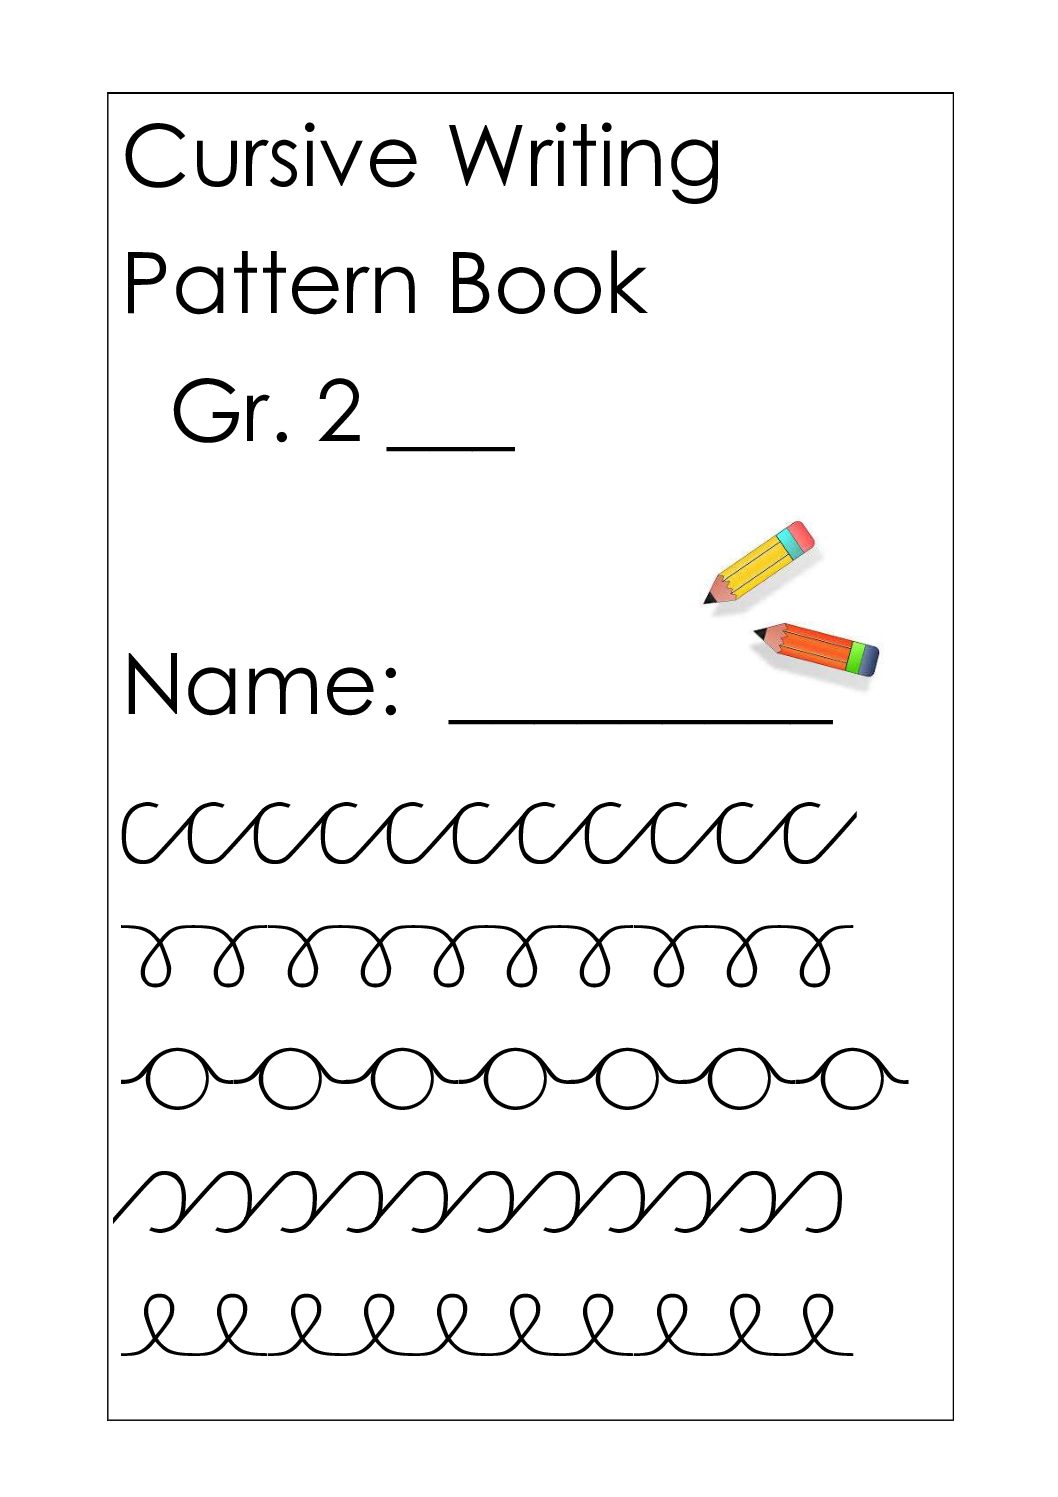 cursive-handwriting-books-pdf-how-to-write-cursive-handwriting-pdf